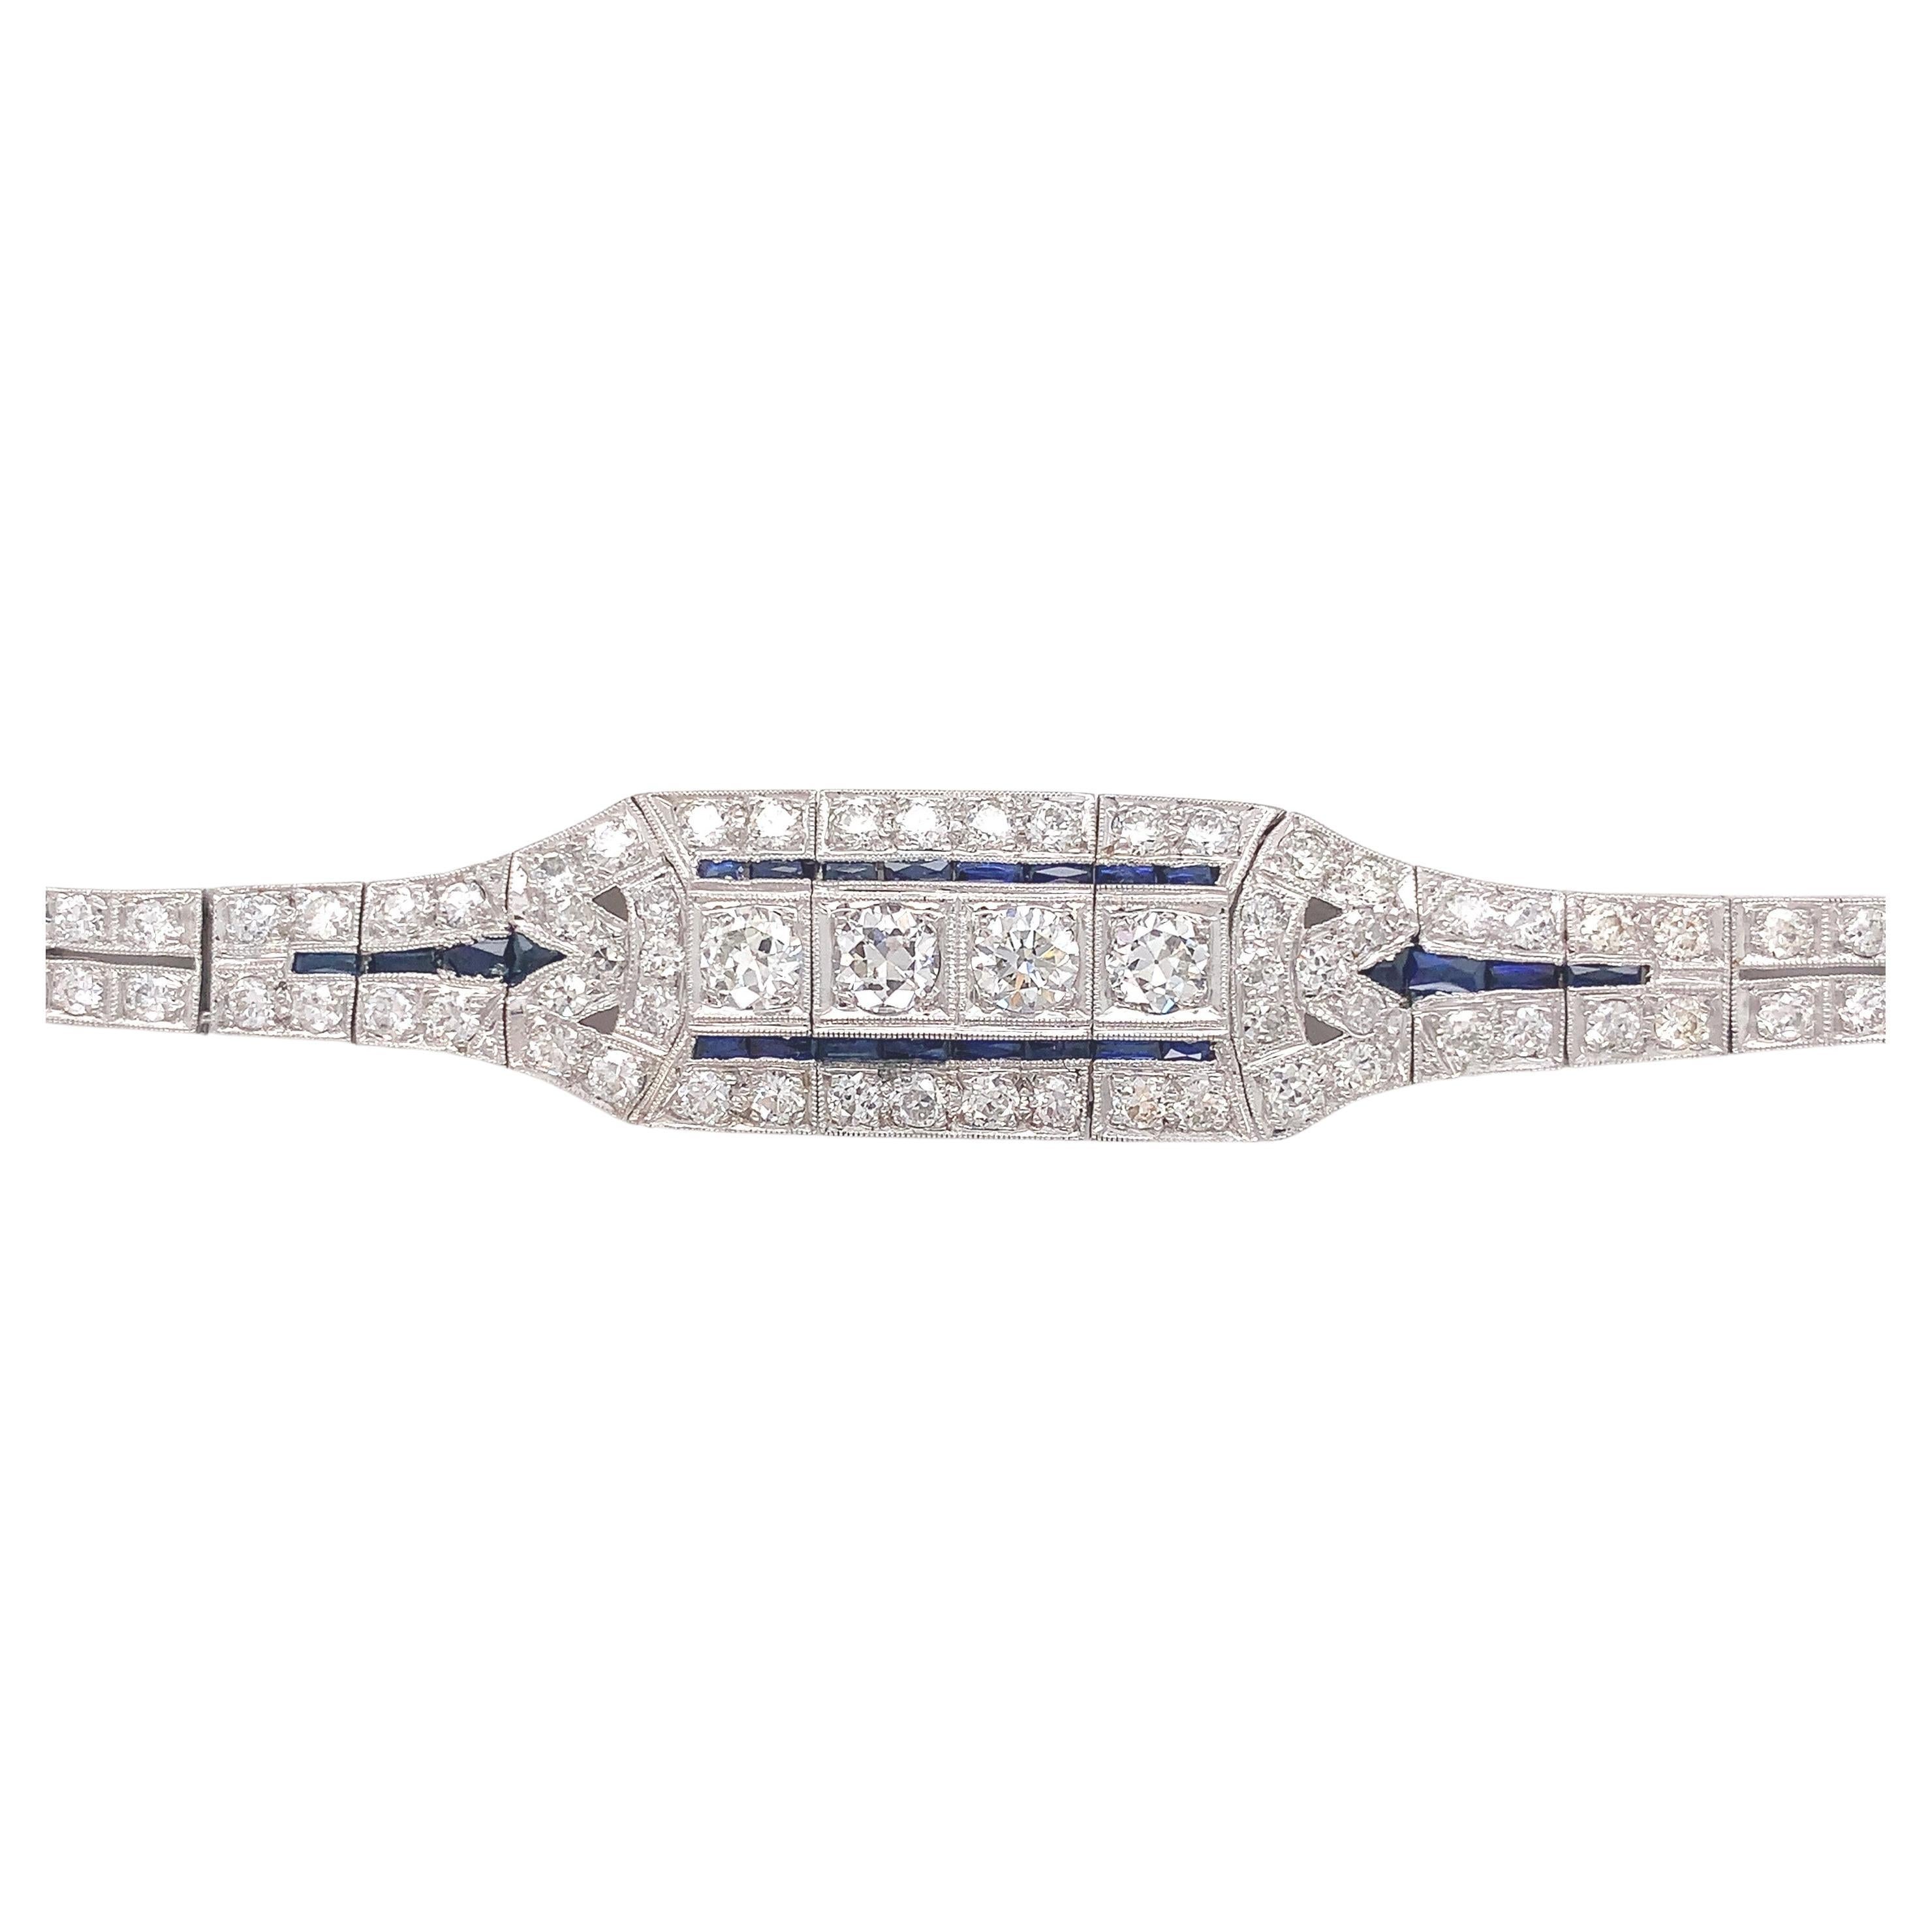 Platinum Art Deco 4.25 carat tw Diamond Bracelet with 18K clasp 7 1/8"